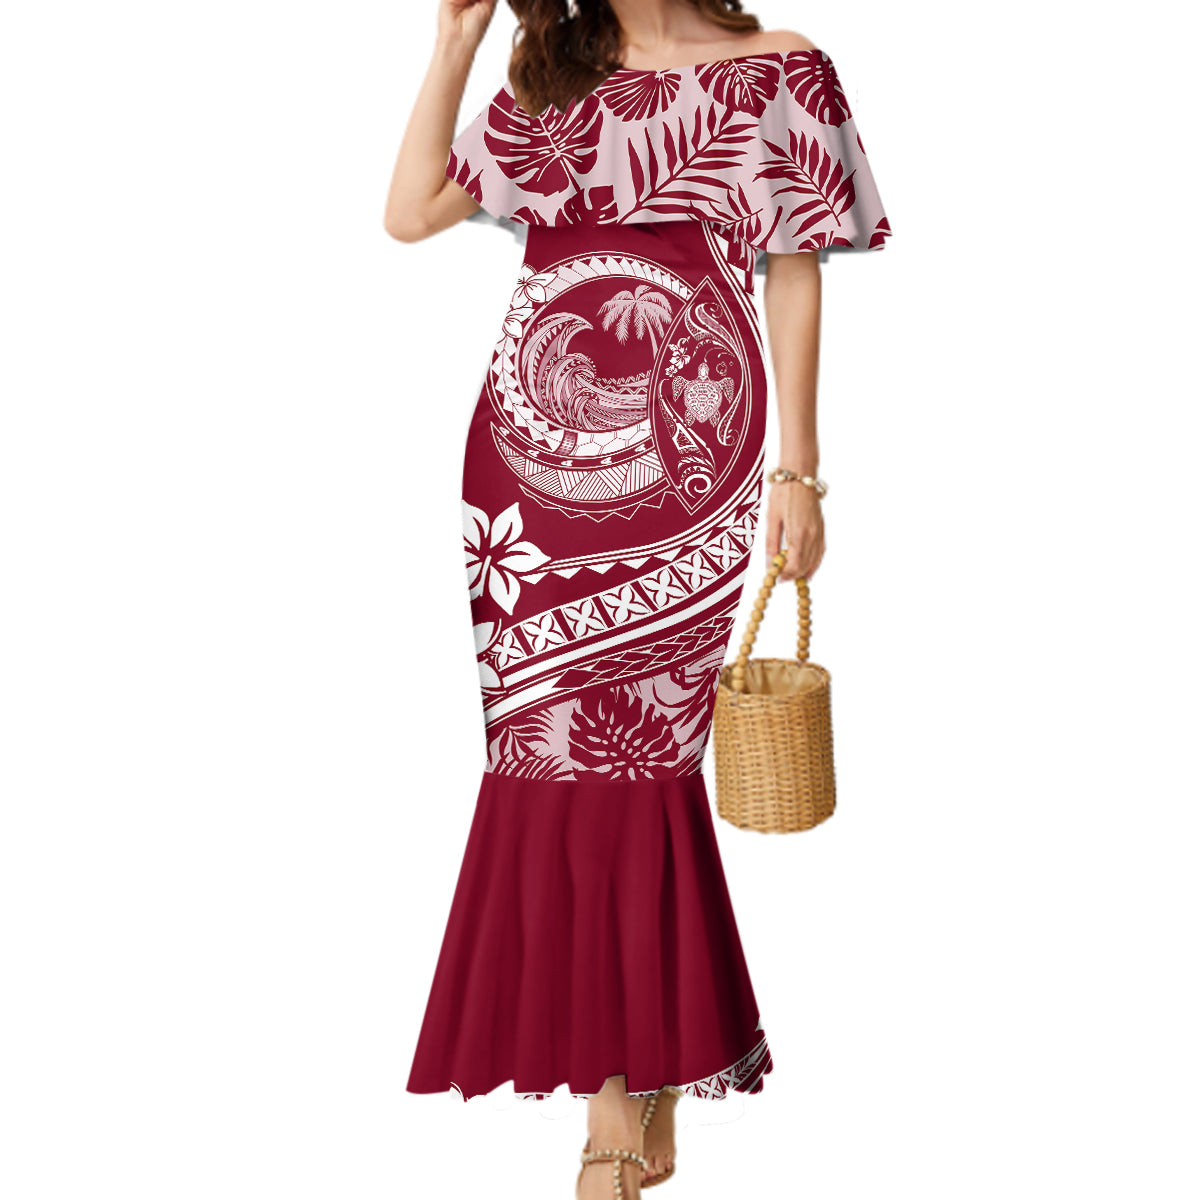 Polynesian Plumeria Mermaid Dress Ride The Waves - Burgundy LT7 Women Burgundy - Polynesian Pride